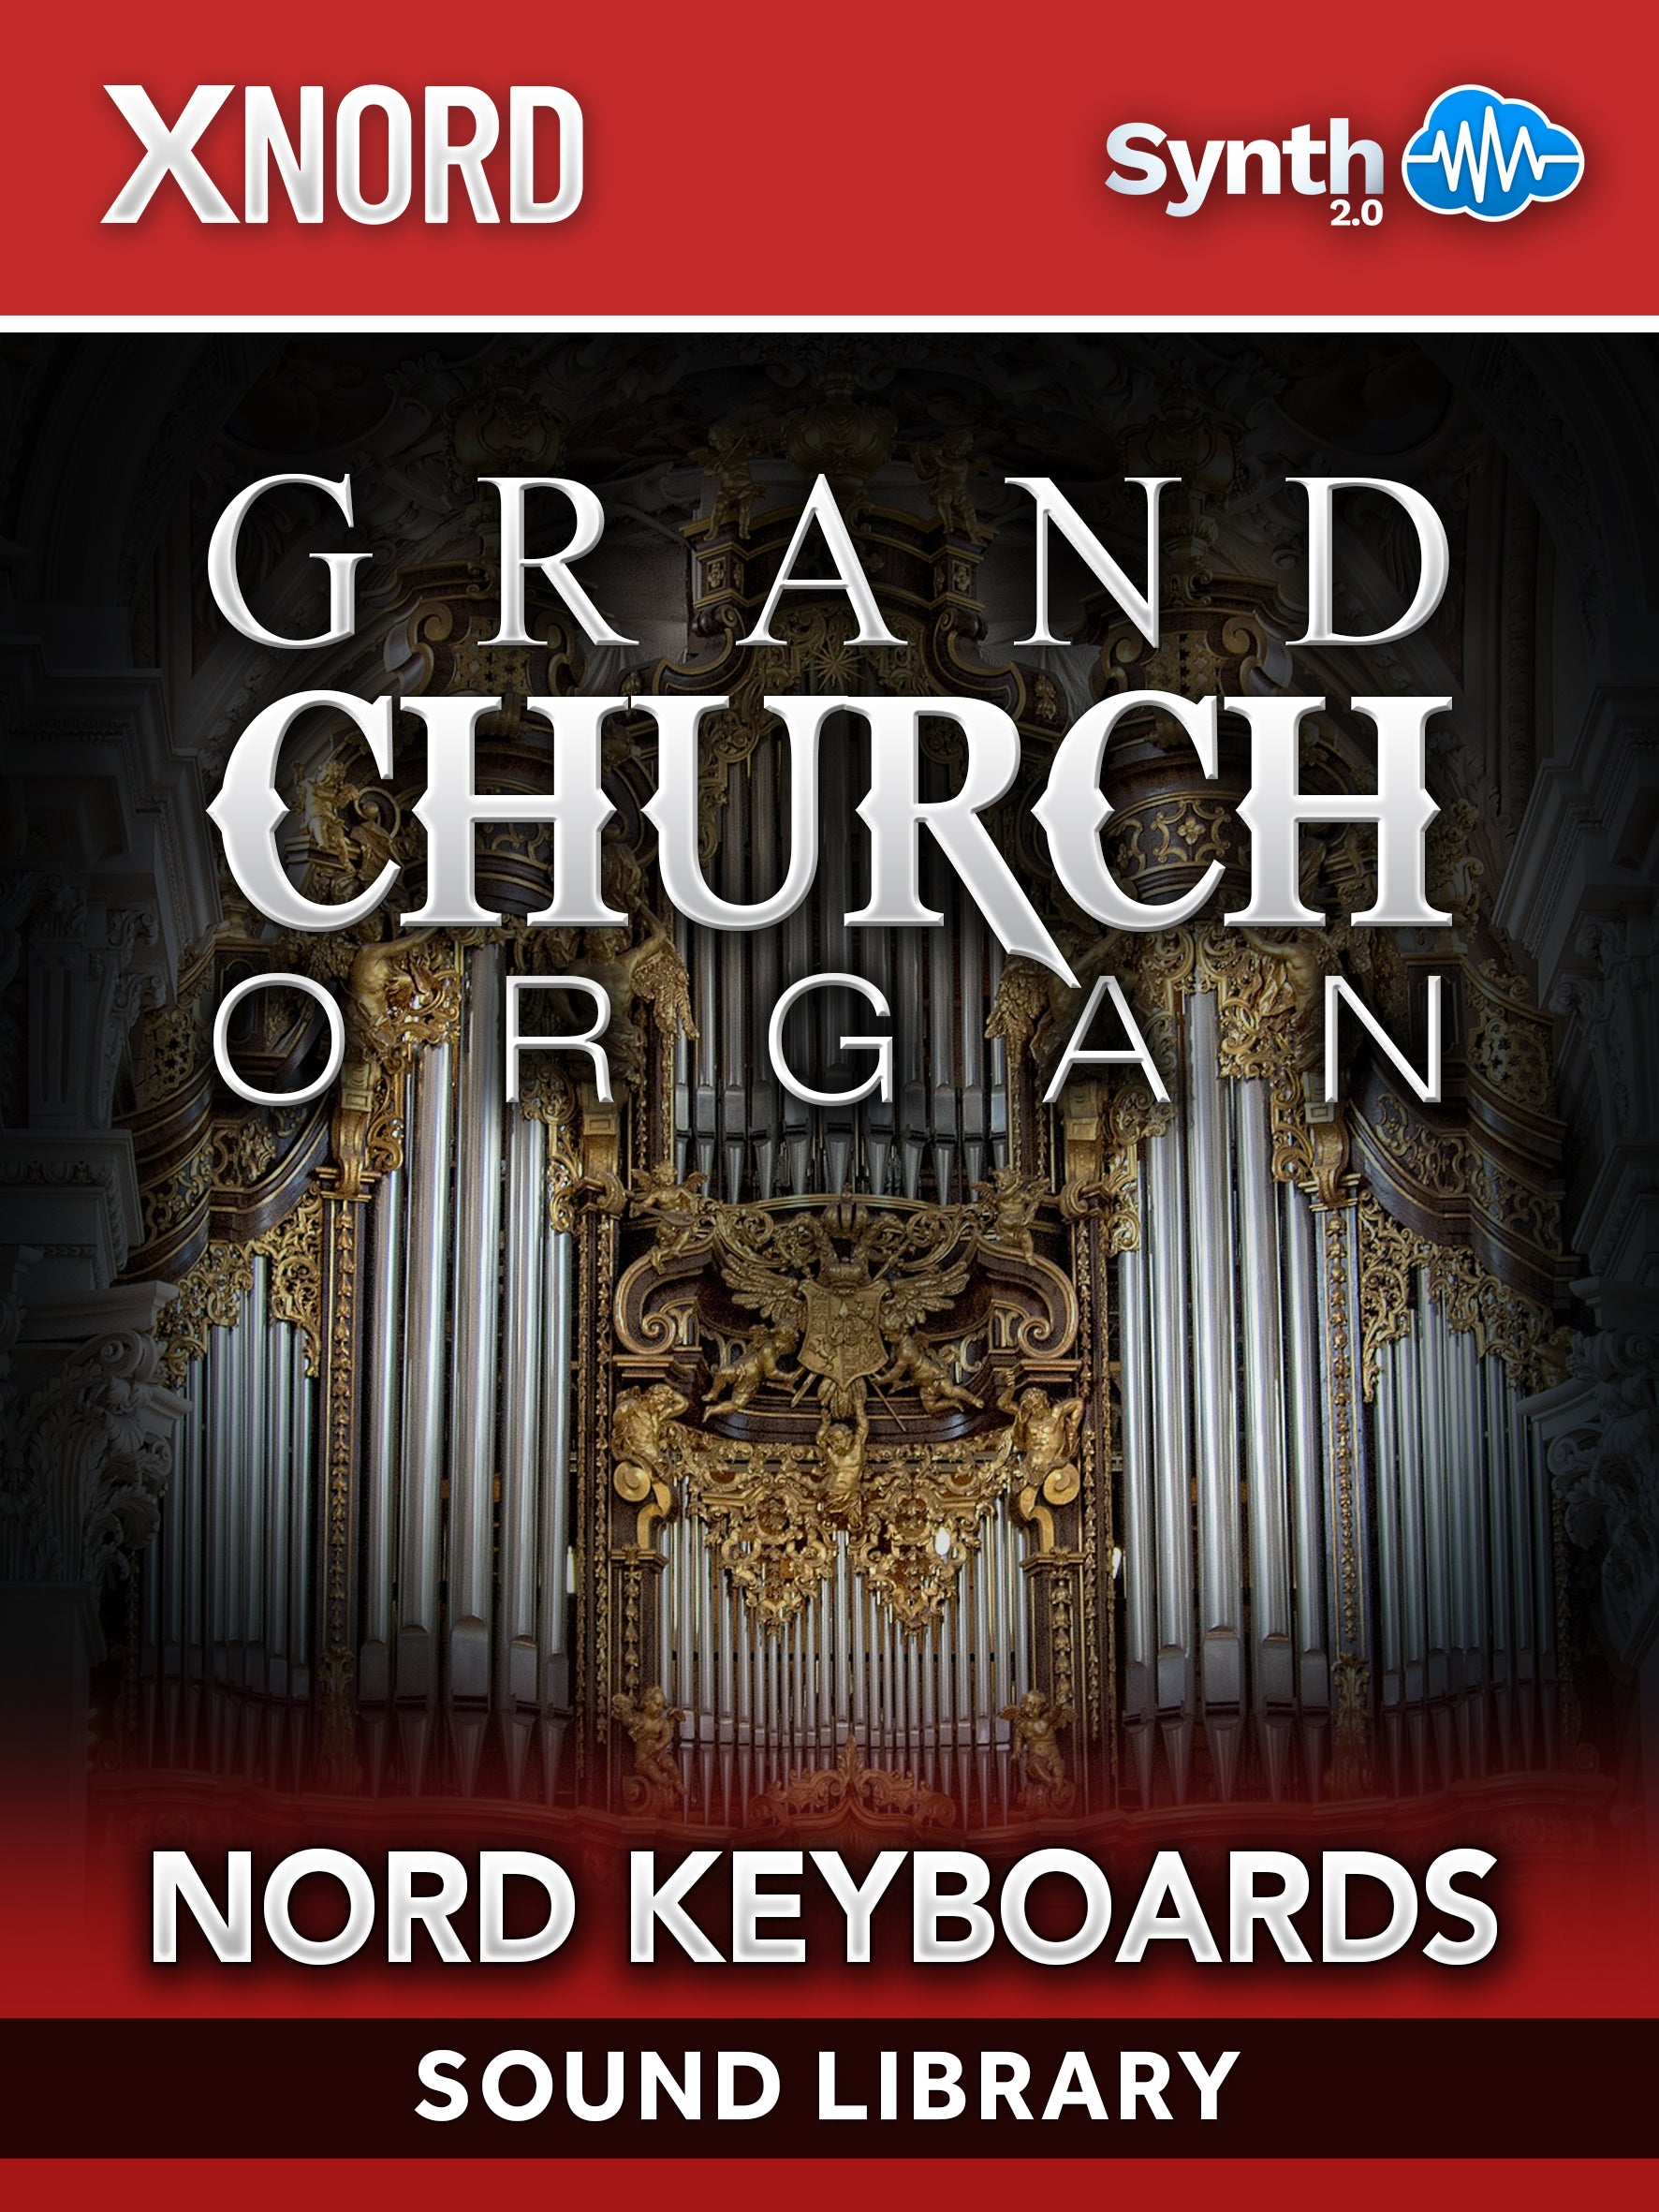 RCL015 - ( Bundle ) - Alessandria Organ + Grand Church Organ - Nord Keyboards